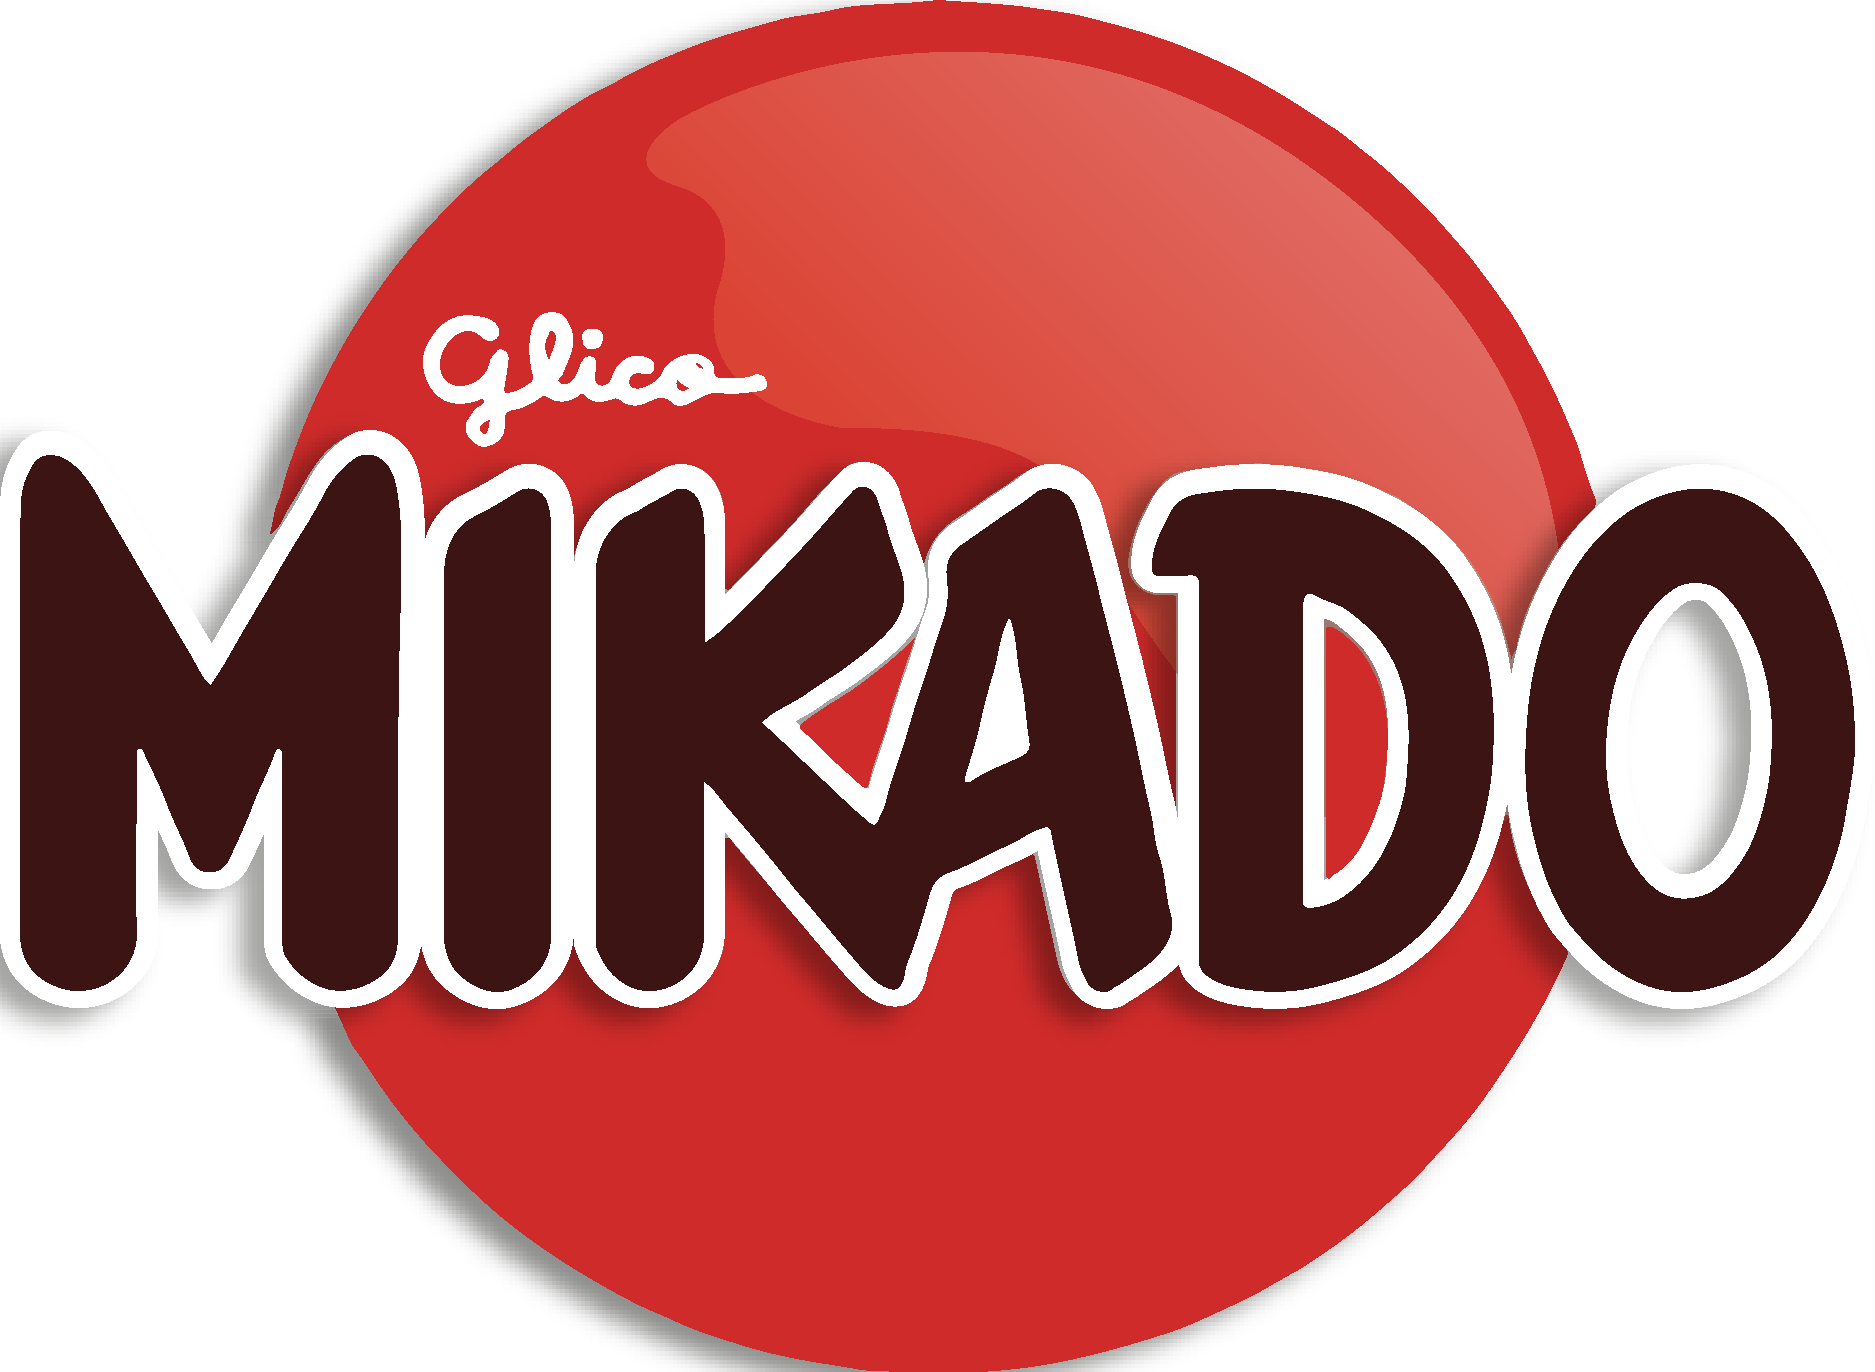 Микадо вход. Микадо. Mikado бренд. Mikado logo. Микадо лого 400.